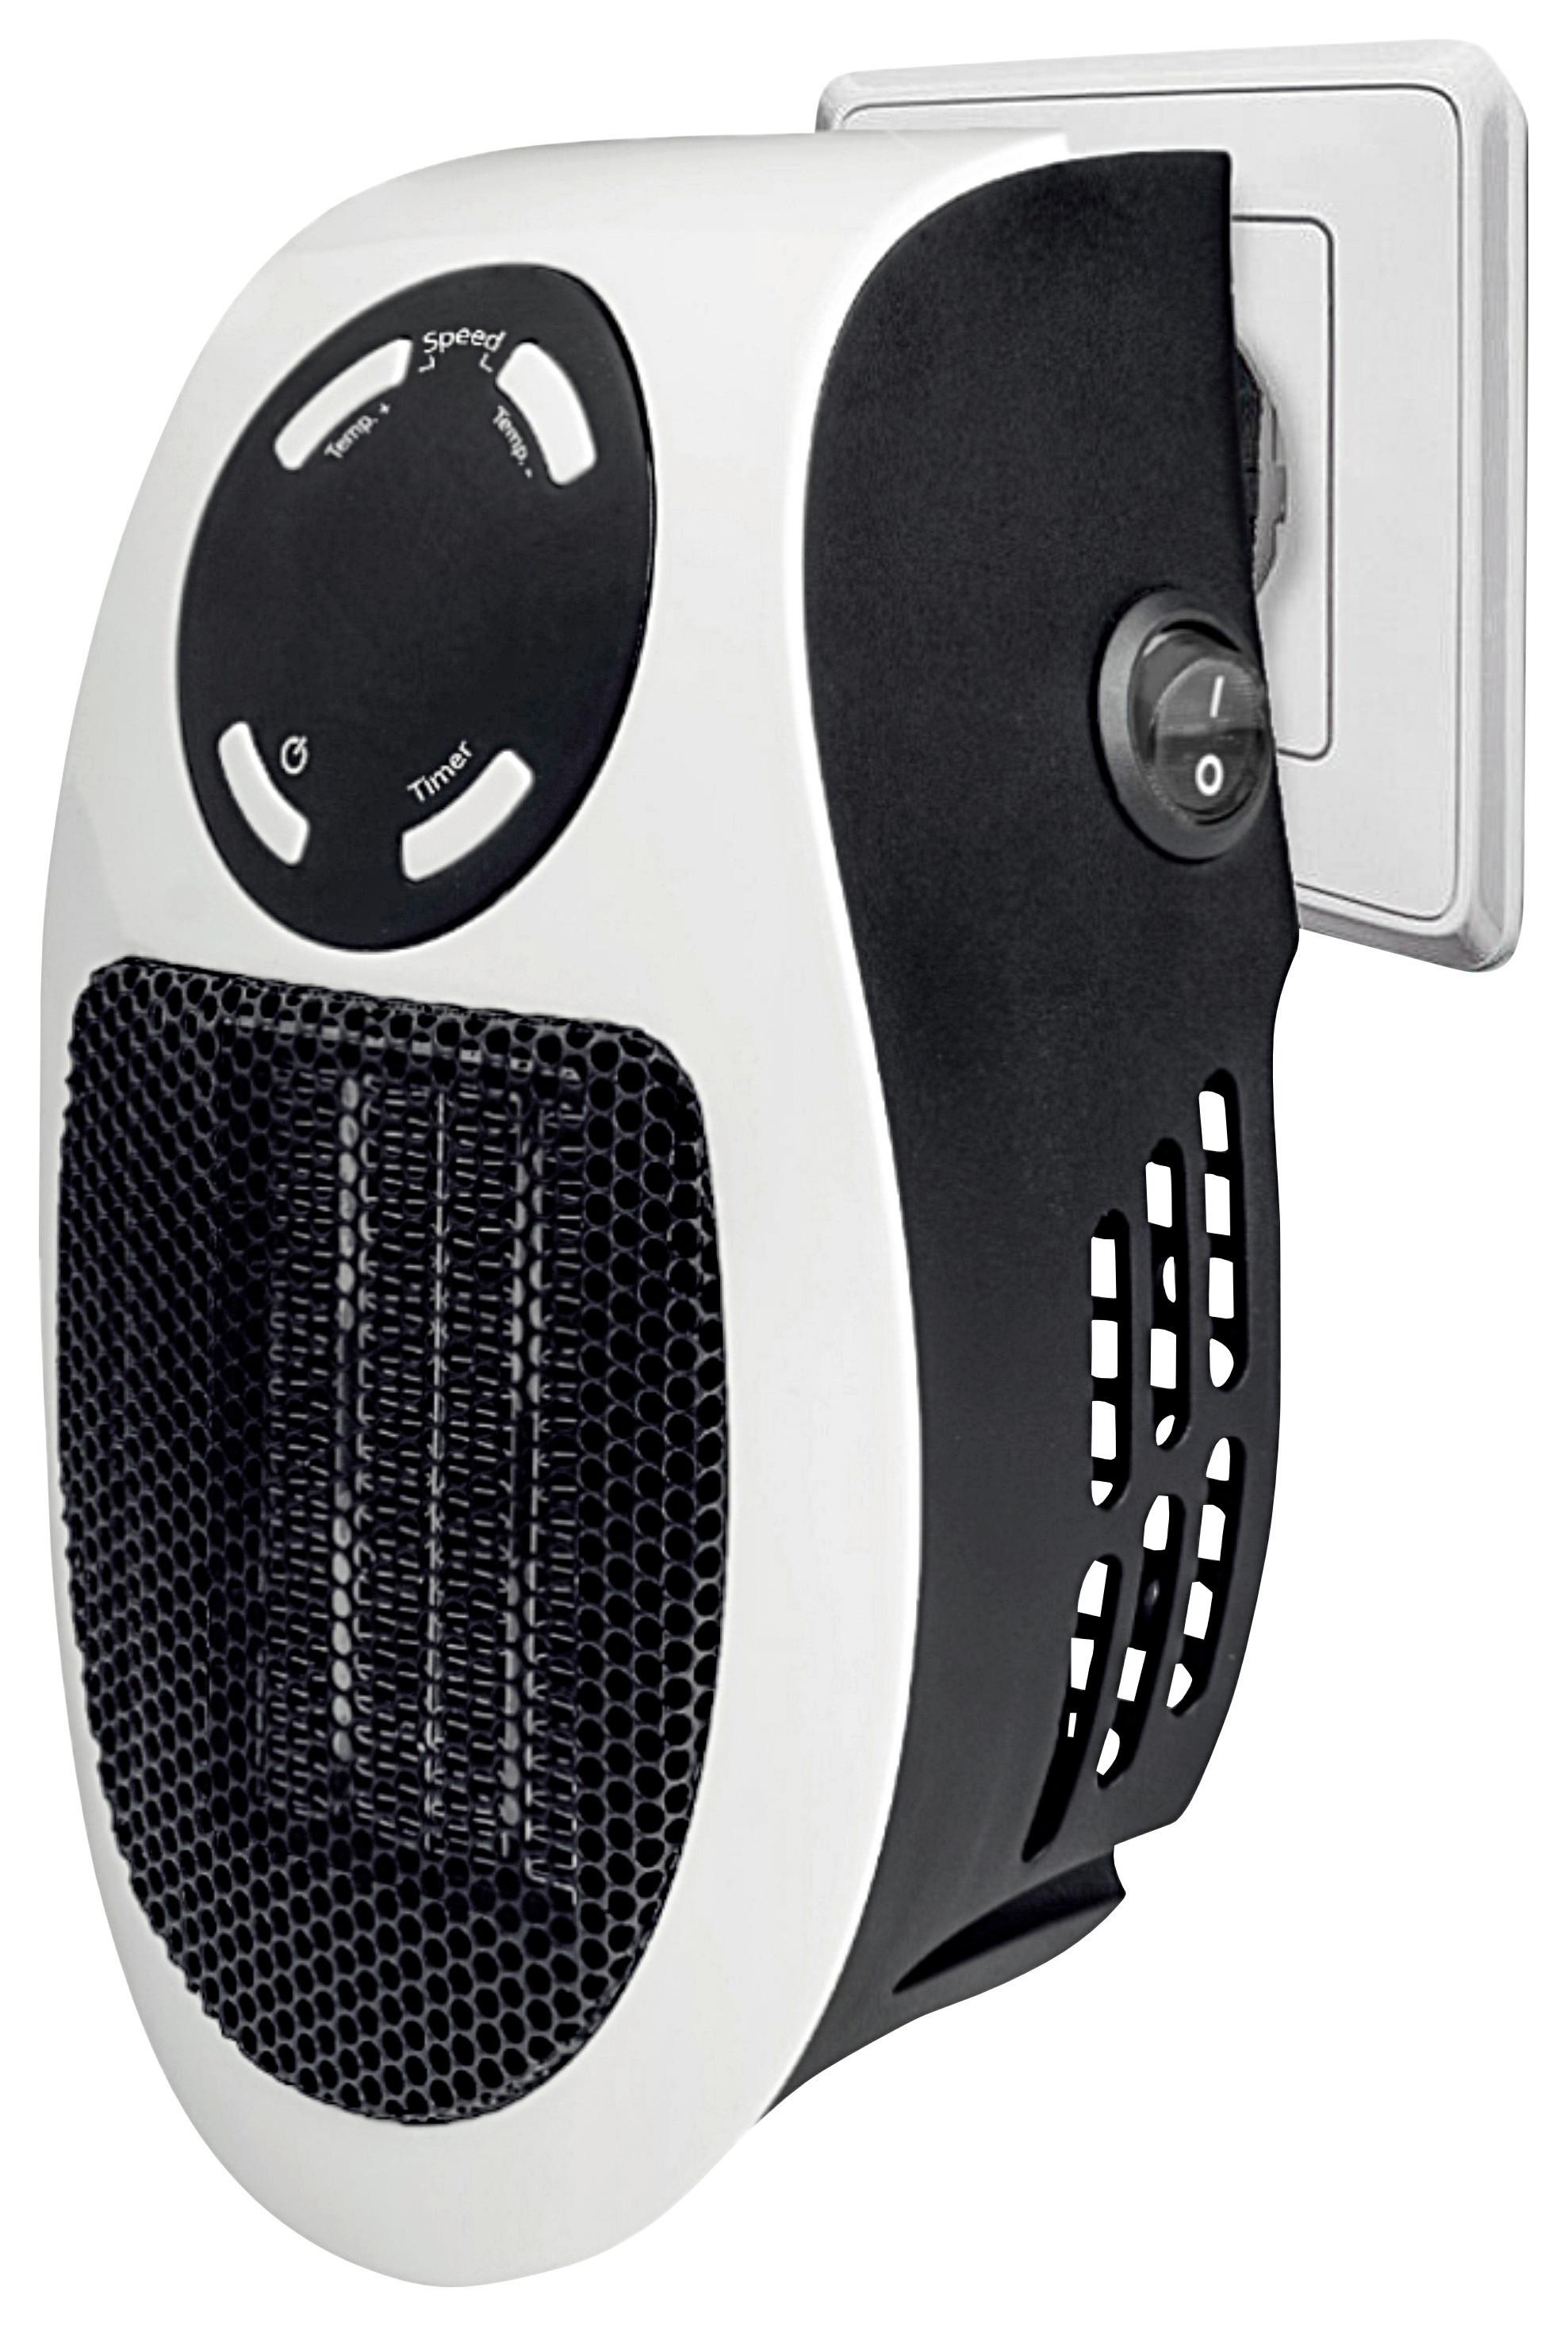 Ohřívač Enzo - bílá/černá, plast (11/11/18cm) - Insido